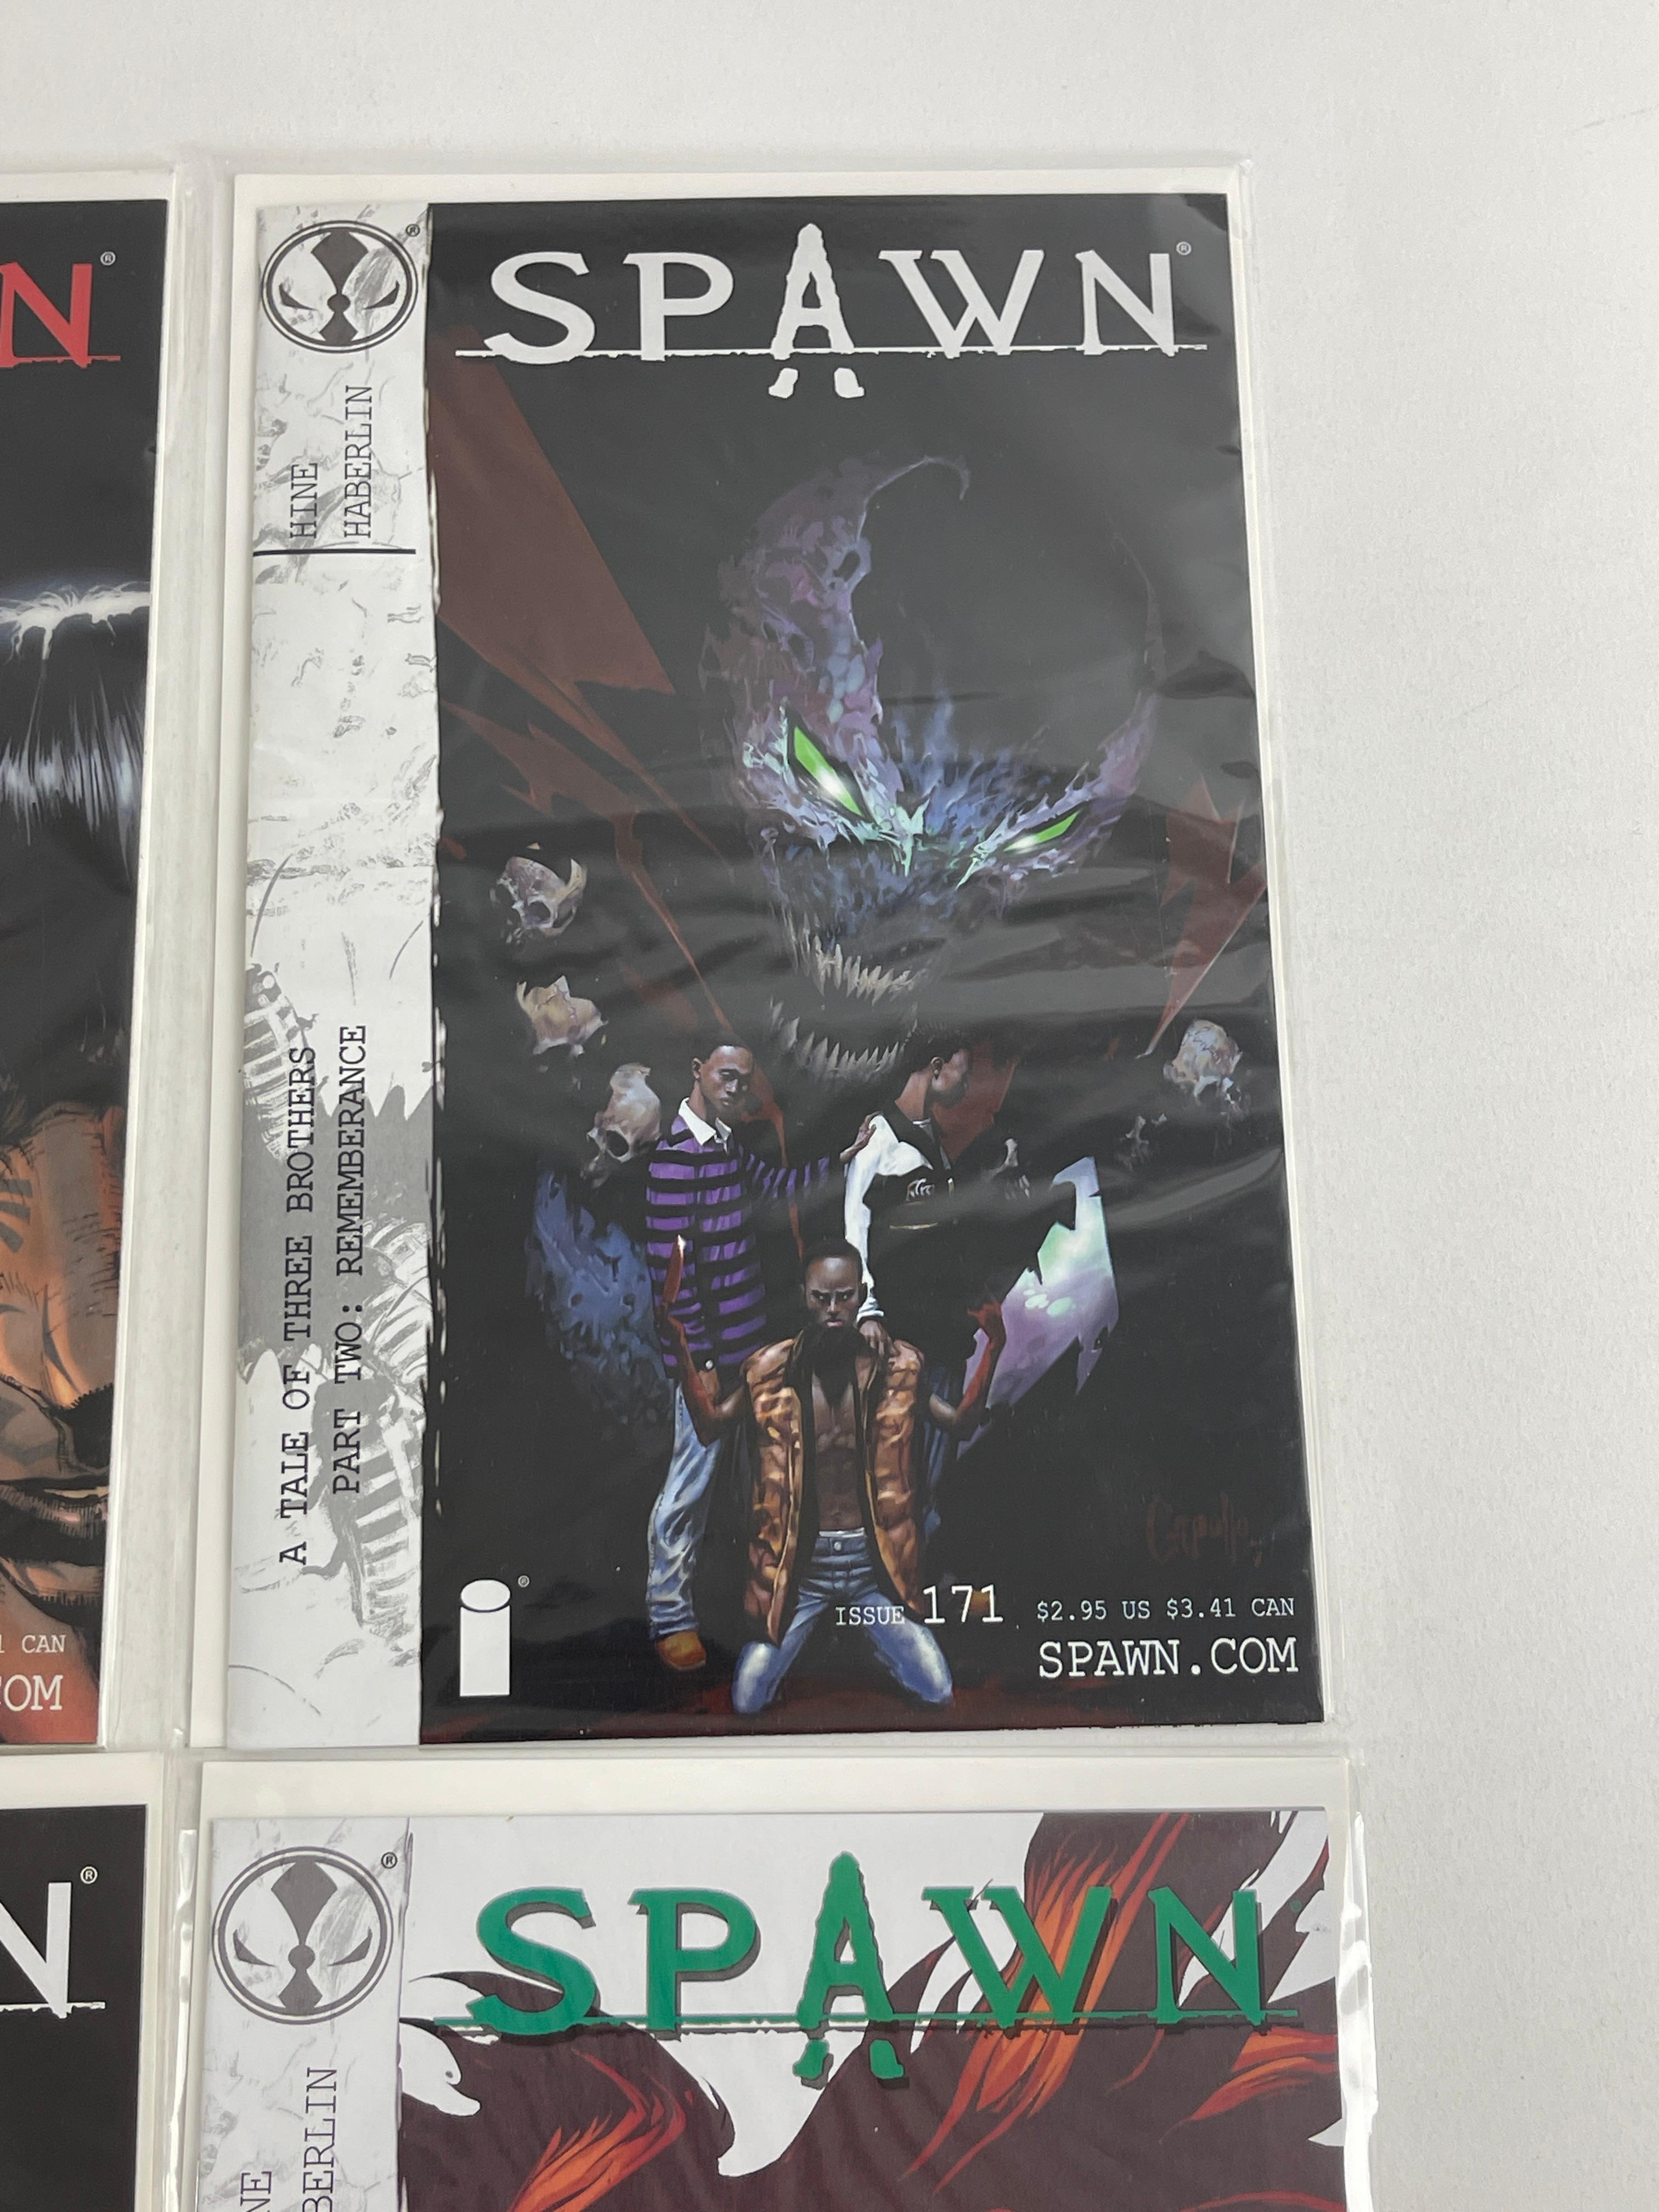 Spawn #170 #171 #172 & #173 Comic Books